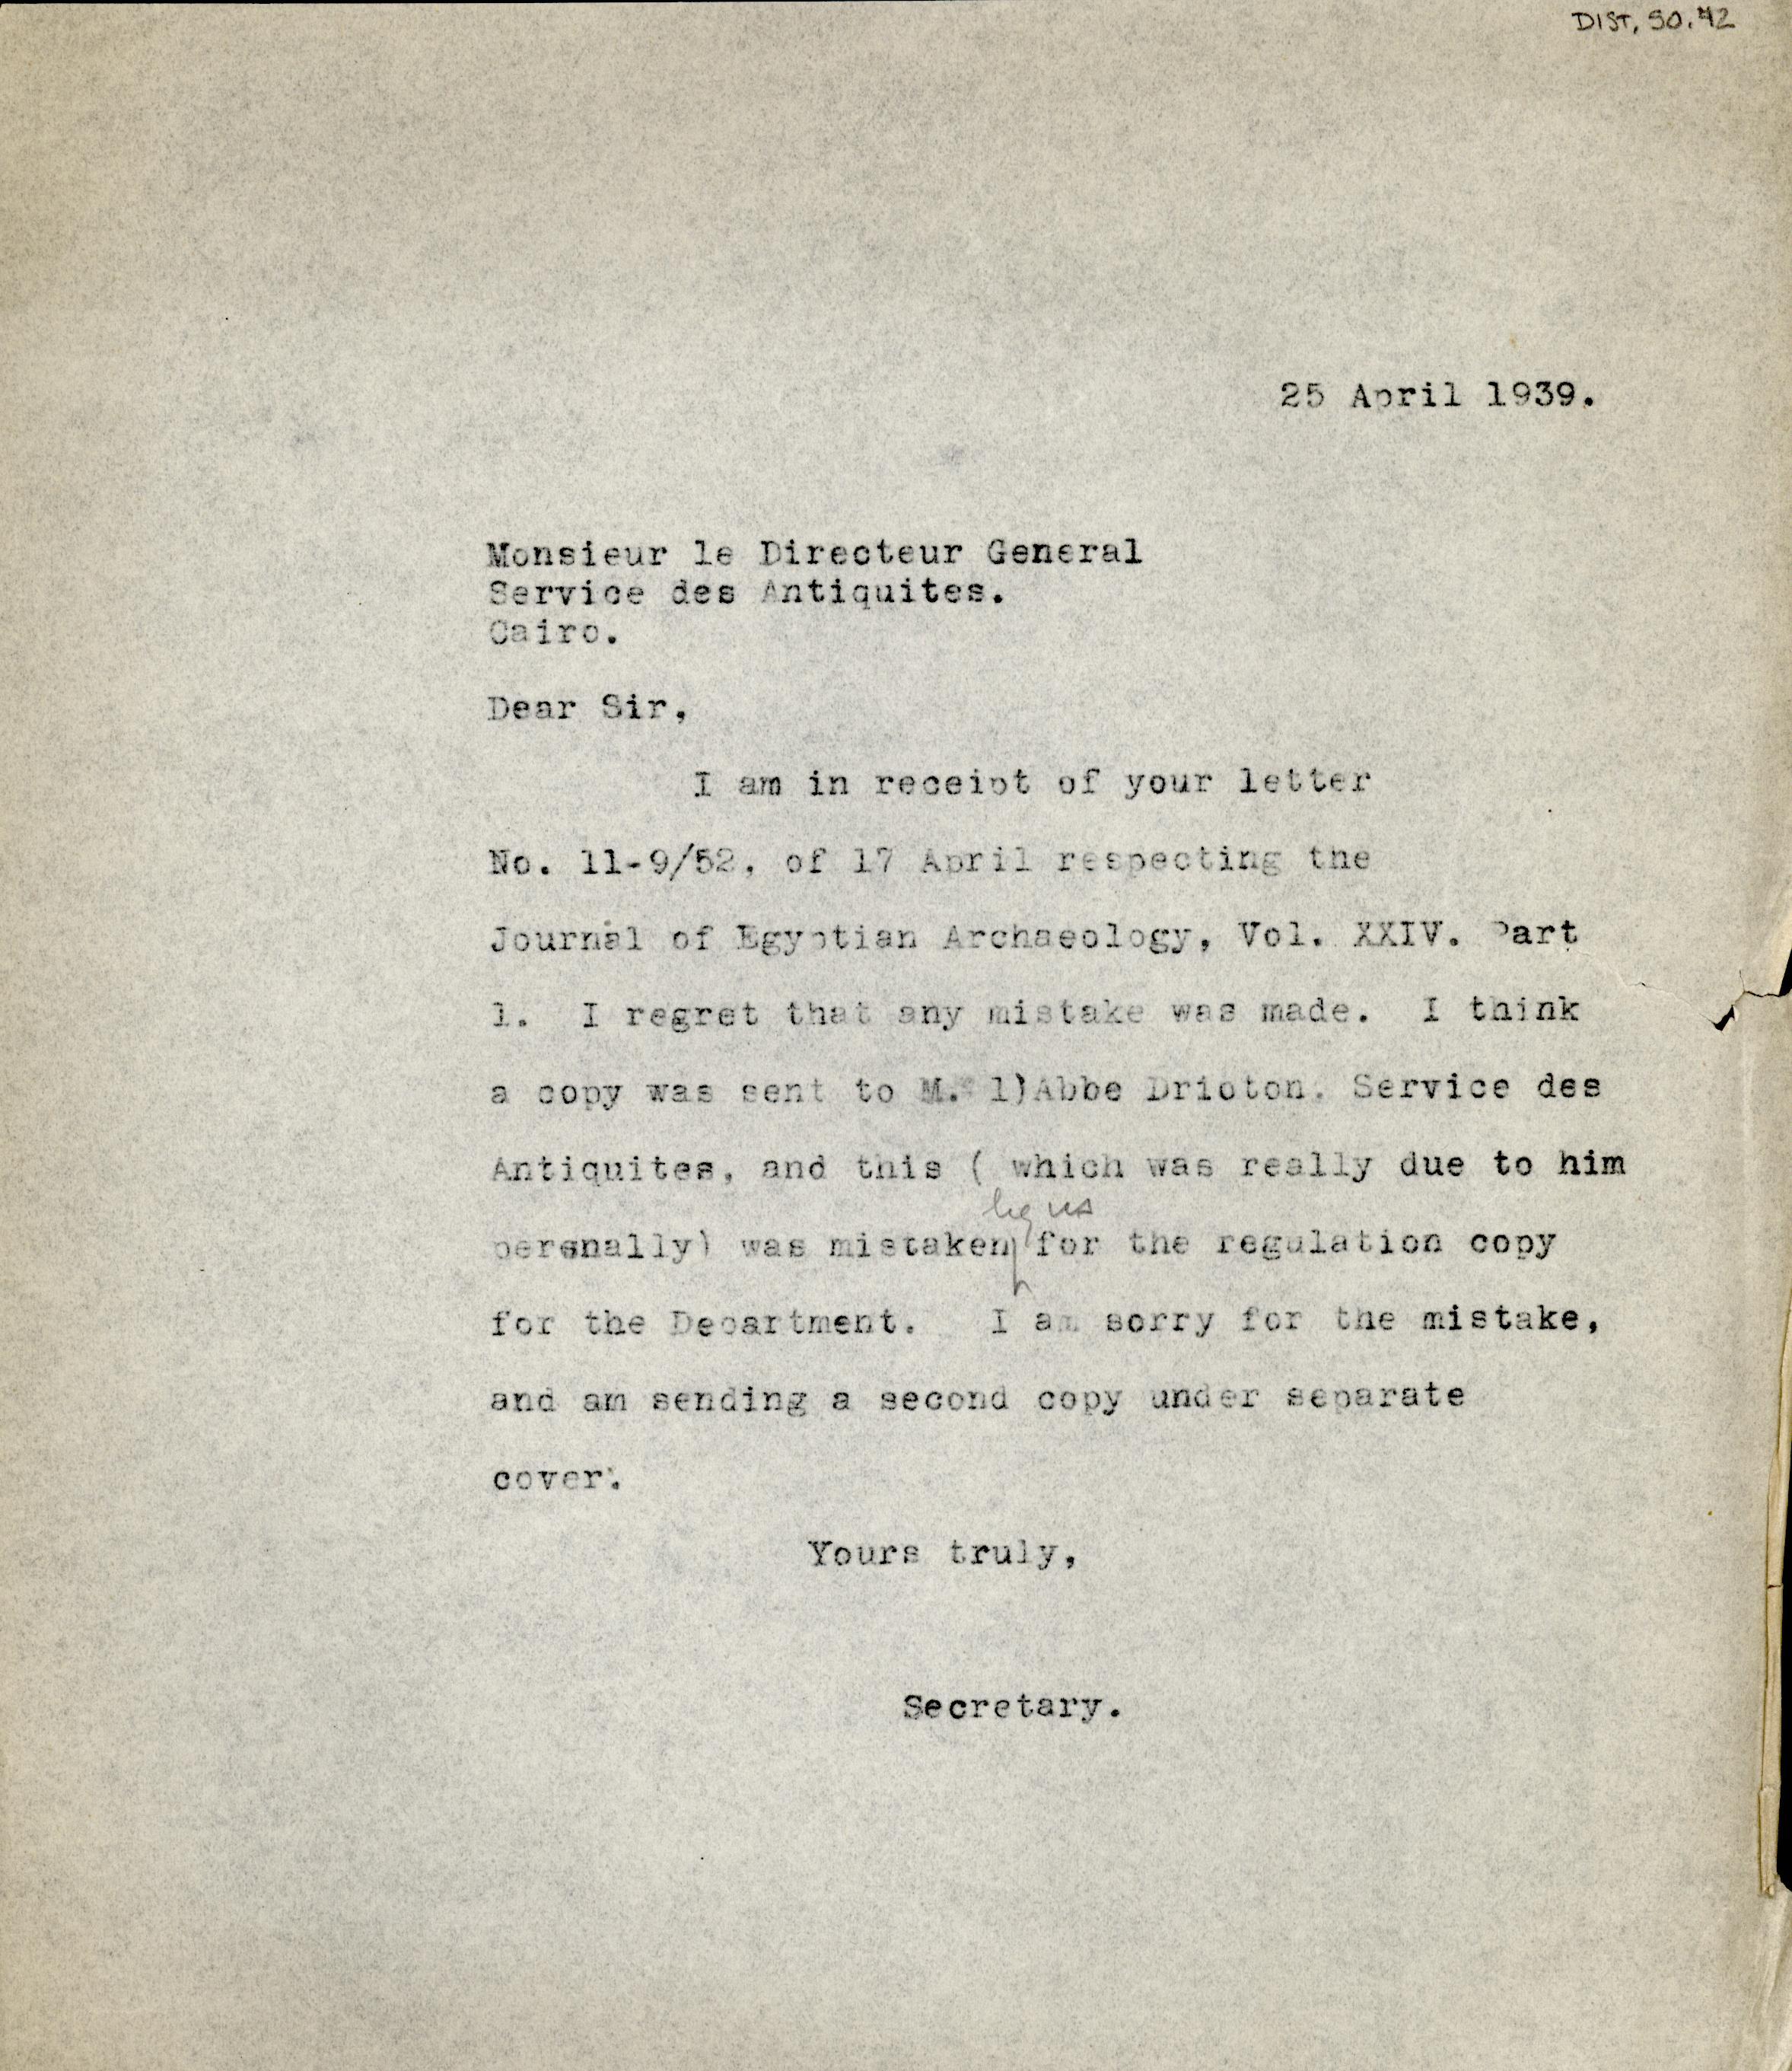 1926-39 correspondence with Antiquities Service DIST.50.42